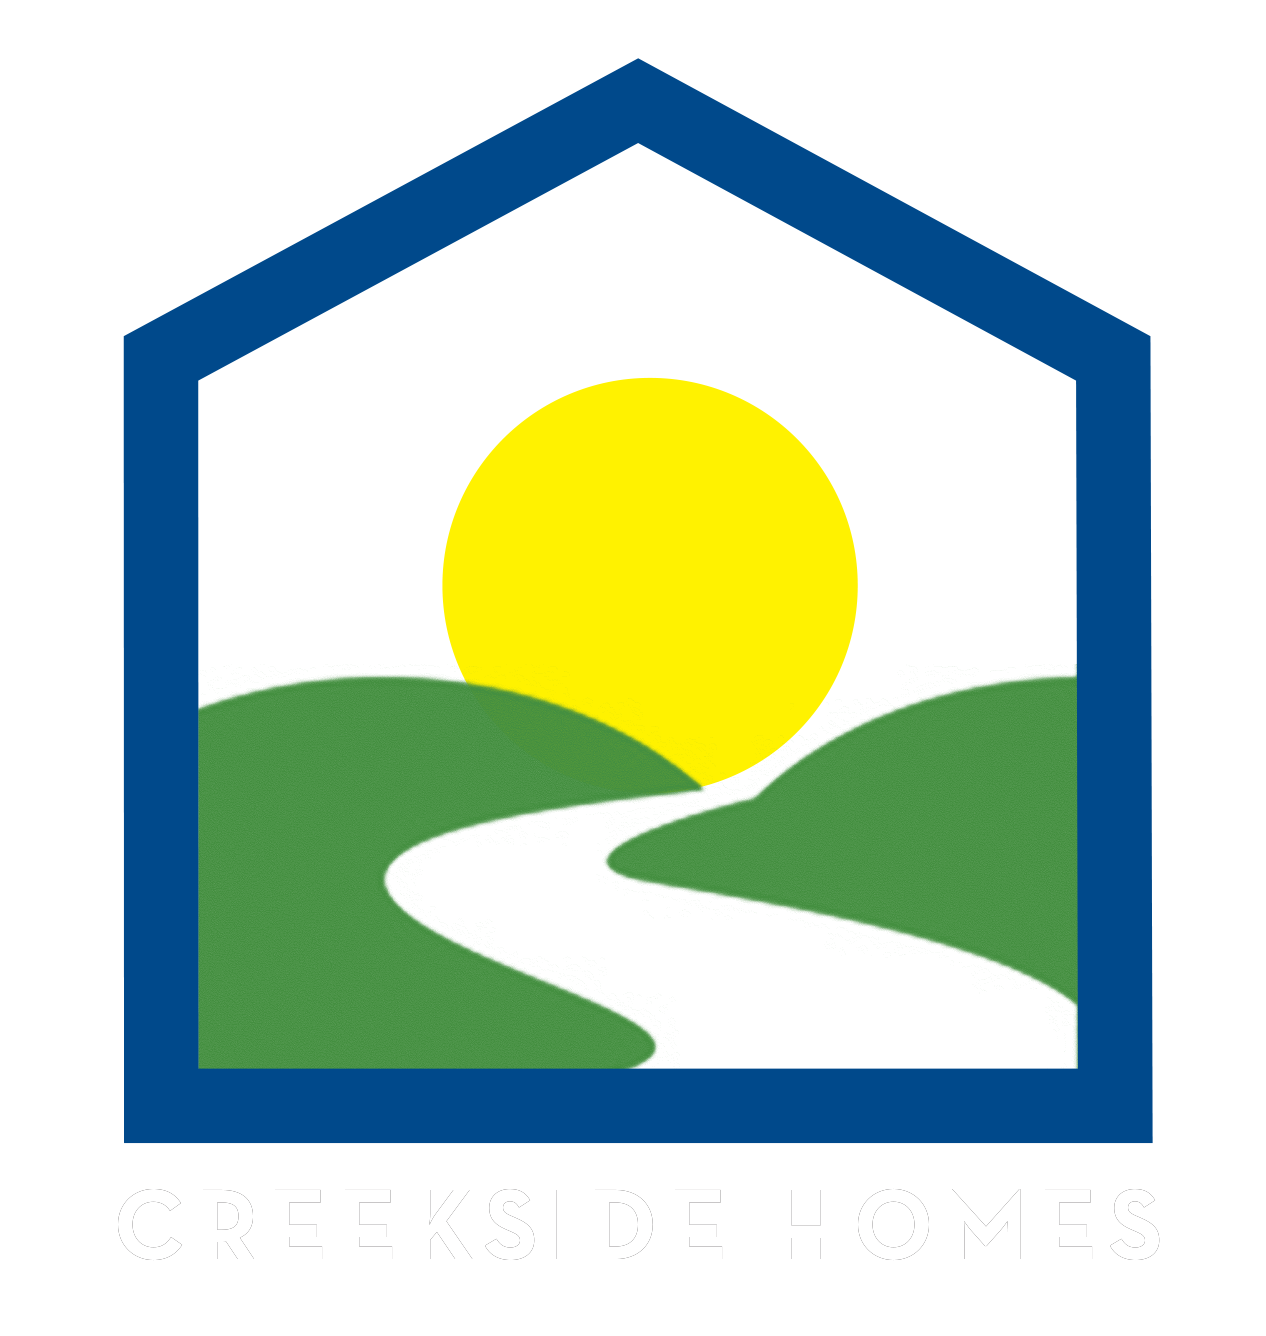 Creekside Homes